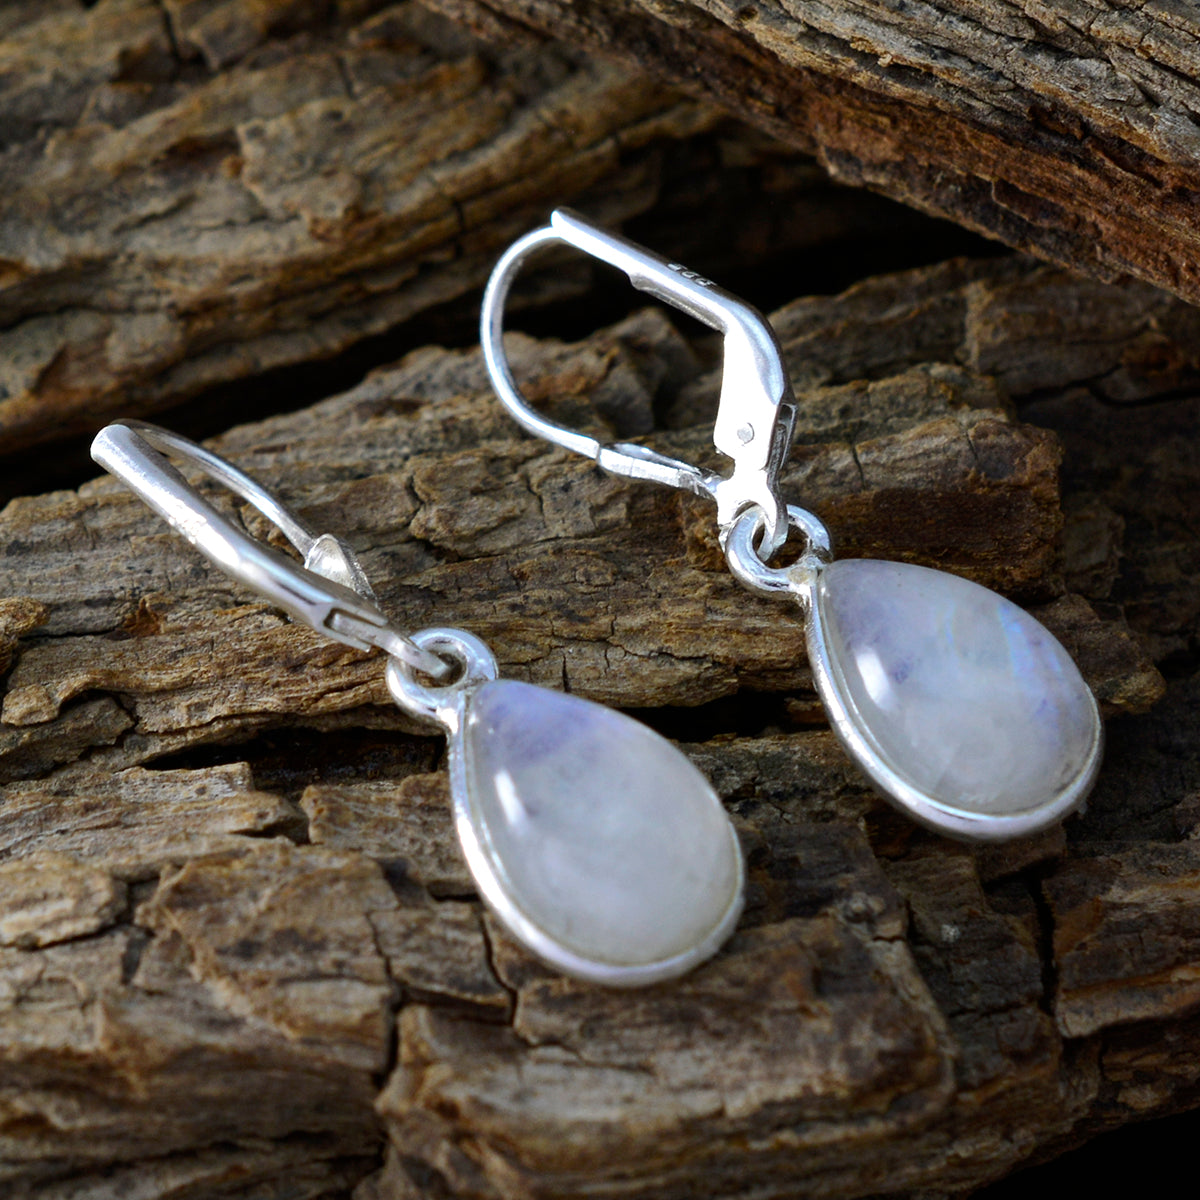 Riyo Gorgeous Sterling Silver Earring For Lady Rainbow Moonstone Earring Bezel Setting White Earring Dangle Earring